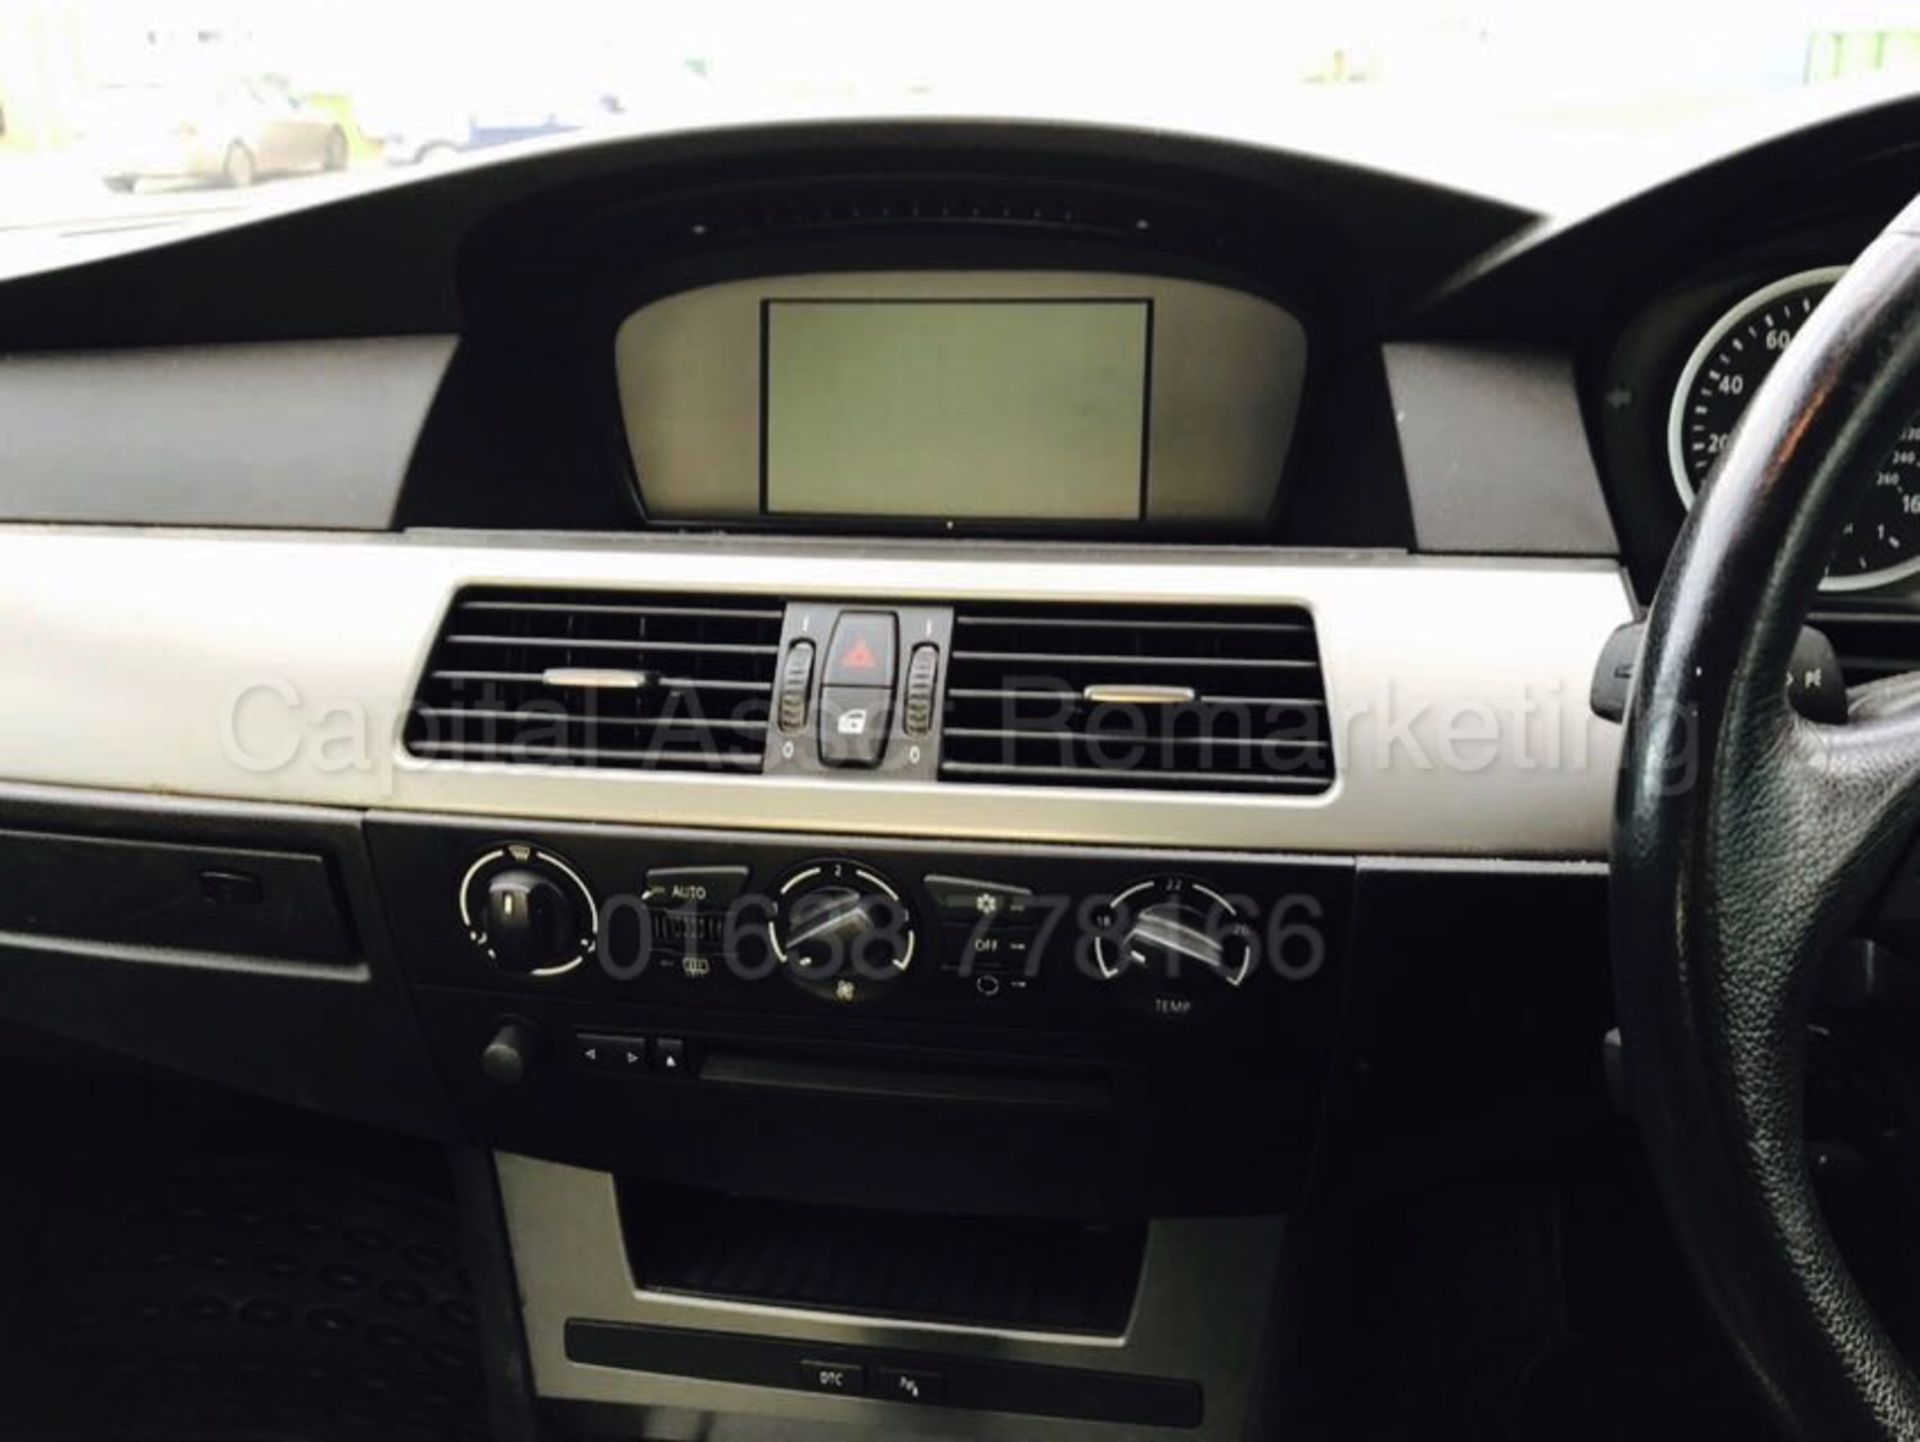 BMW 520D 'SE - SALOON' (2007 MODEL) '2.0 DIESEL - 163 BHP - 6 SPEED' *50 MPG+* (NO VAT - SAVE 20%) - Image 13 of 17